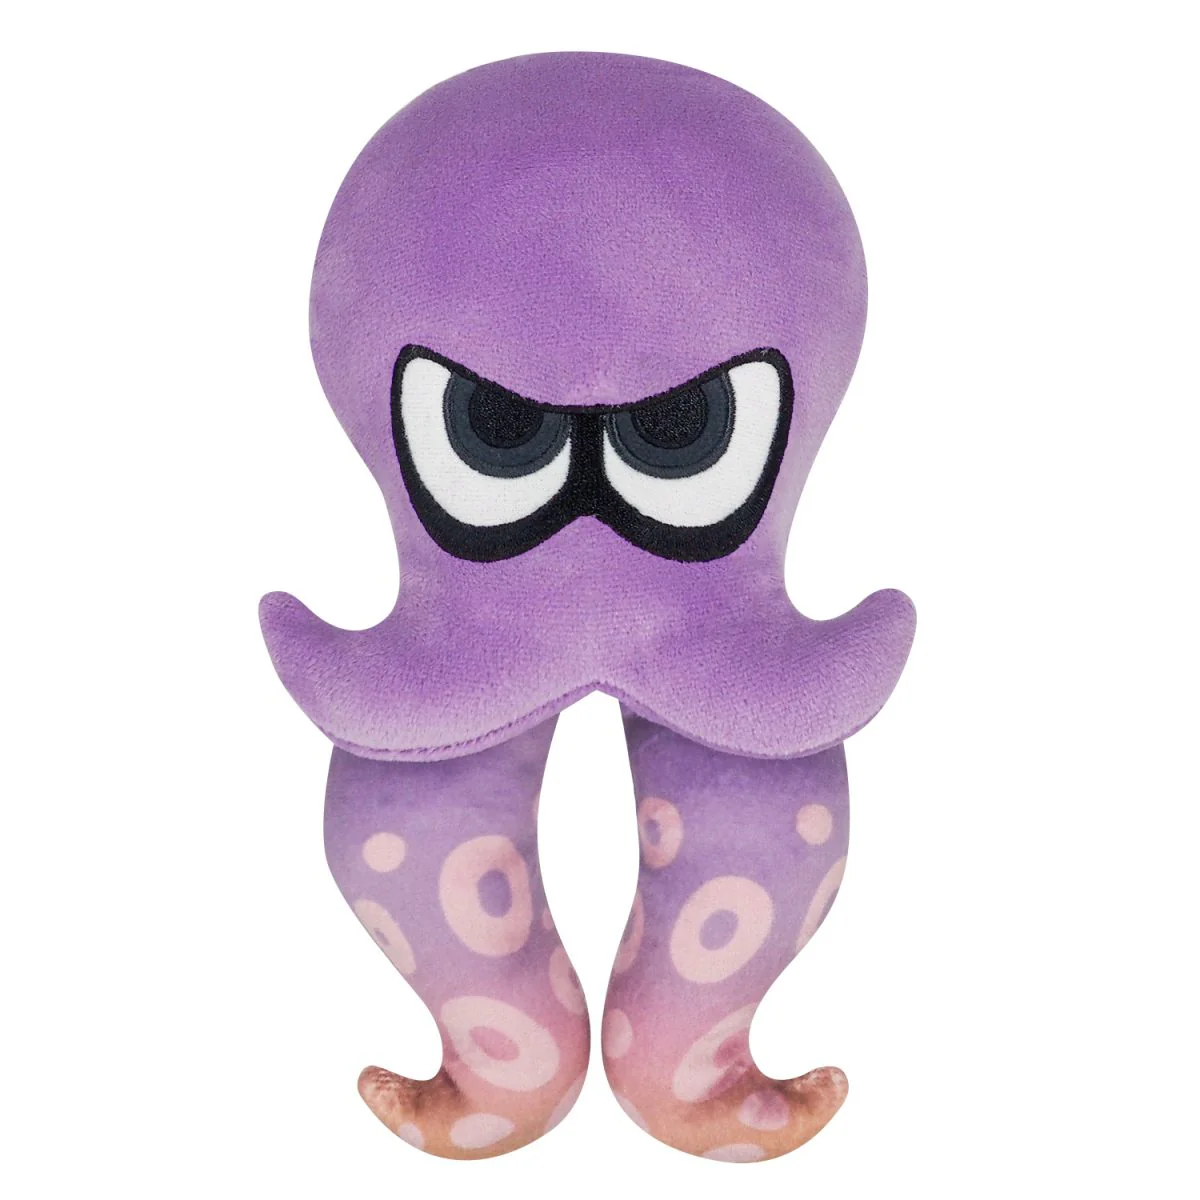 Little Buddy - 9" Purple Octoling Octopus Plush (C02)